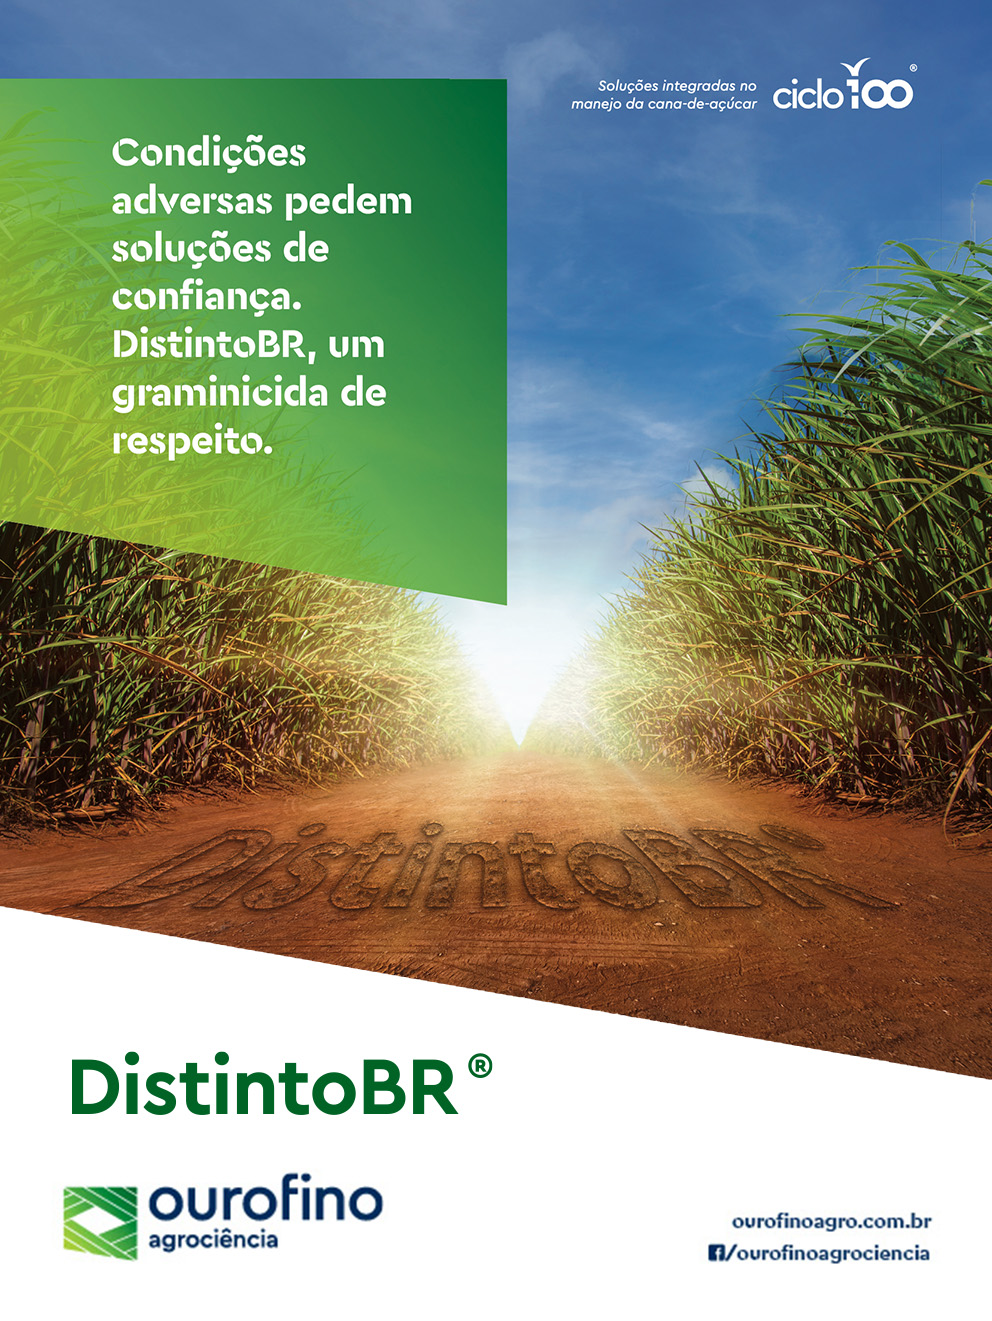 Herbicida DistintoBR Ourofino Agrociência